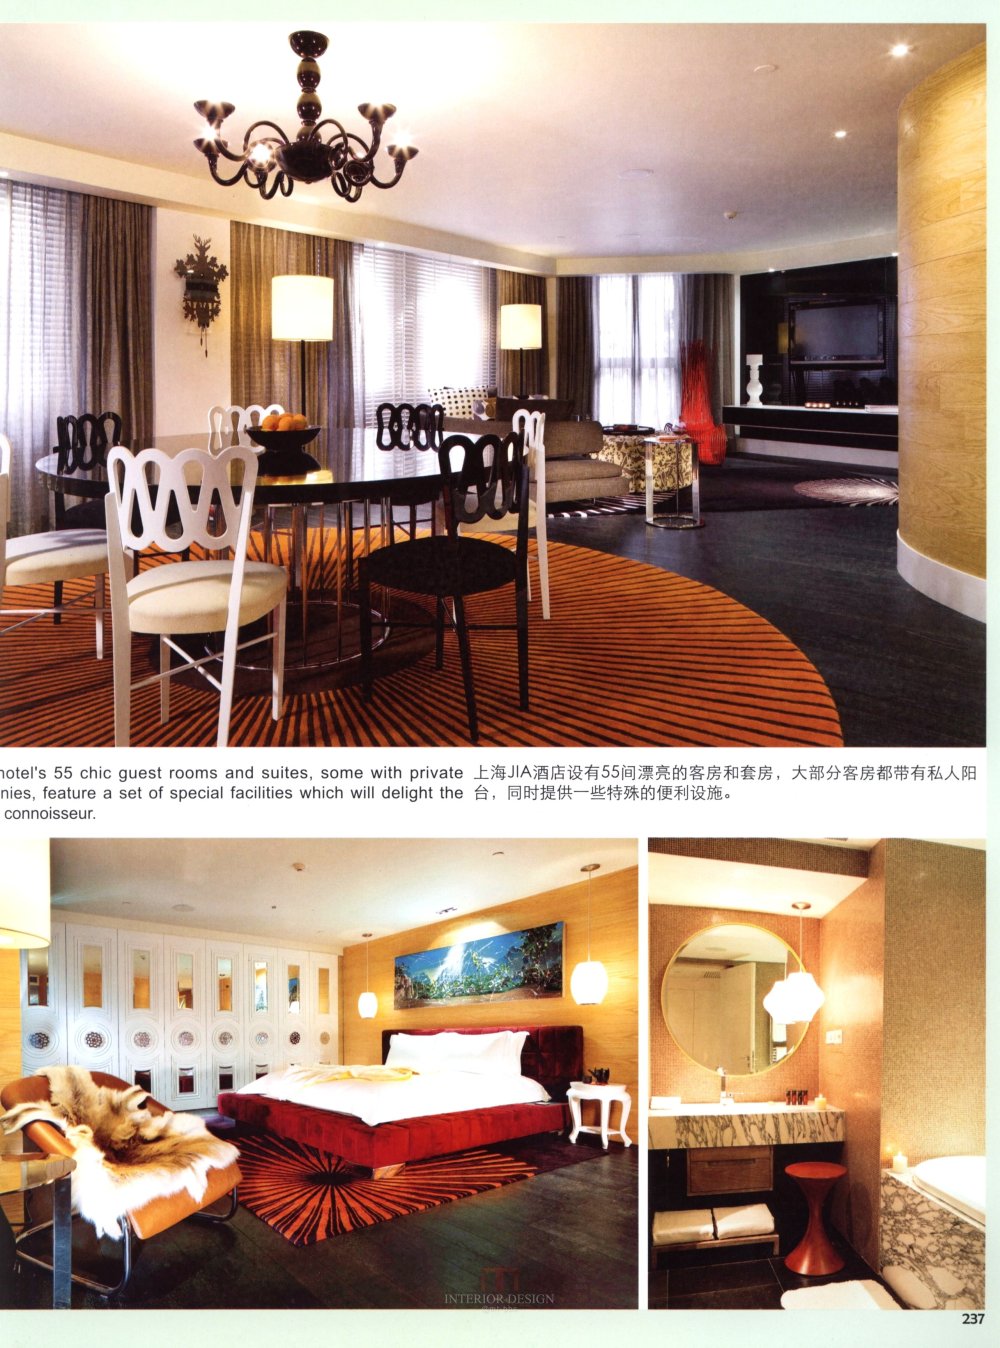 101全球酒店客房 101HOTELS GUEST ROOMS_图站_AiJpgg_com_232.jpg